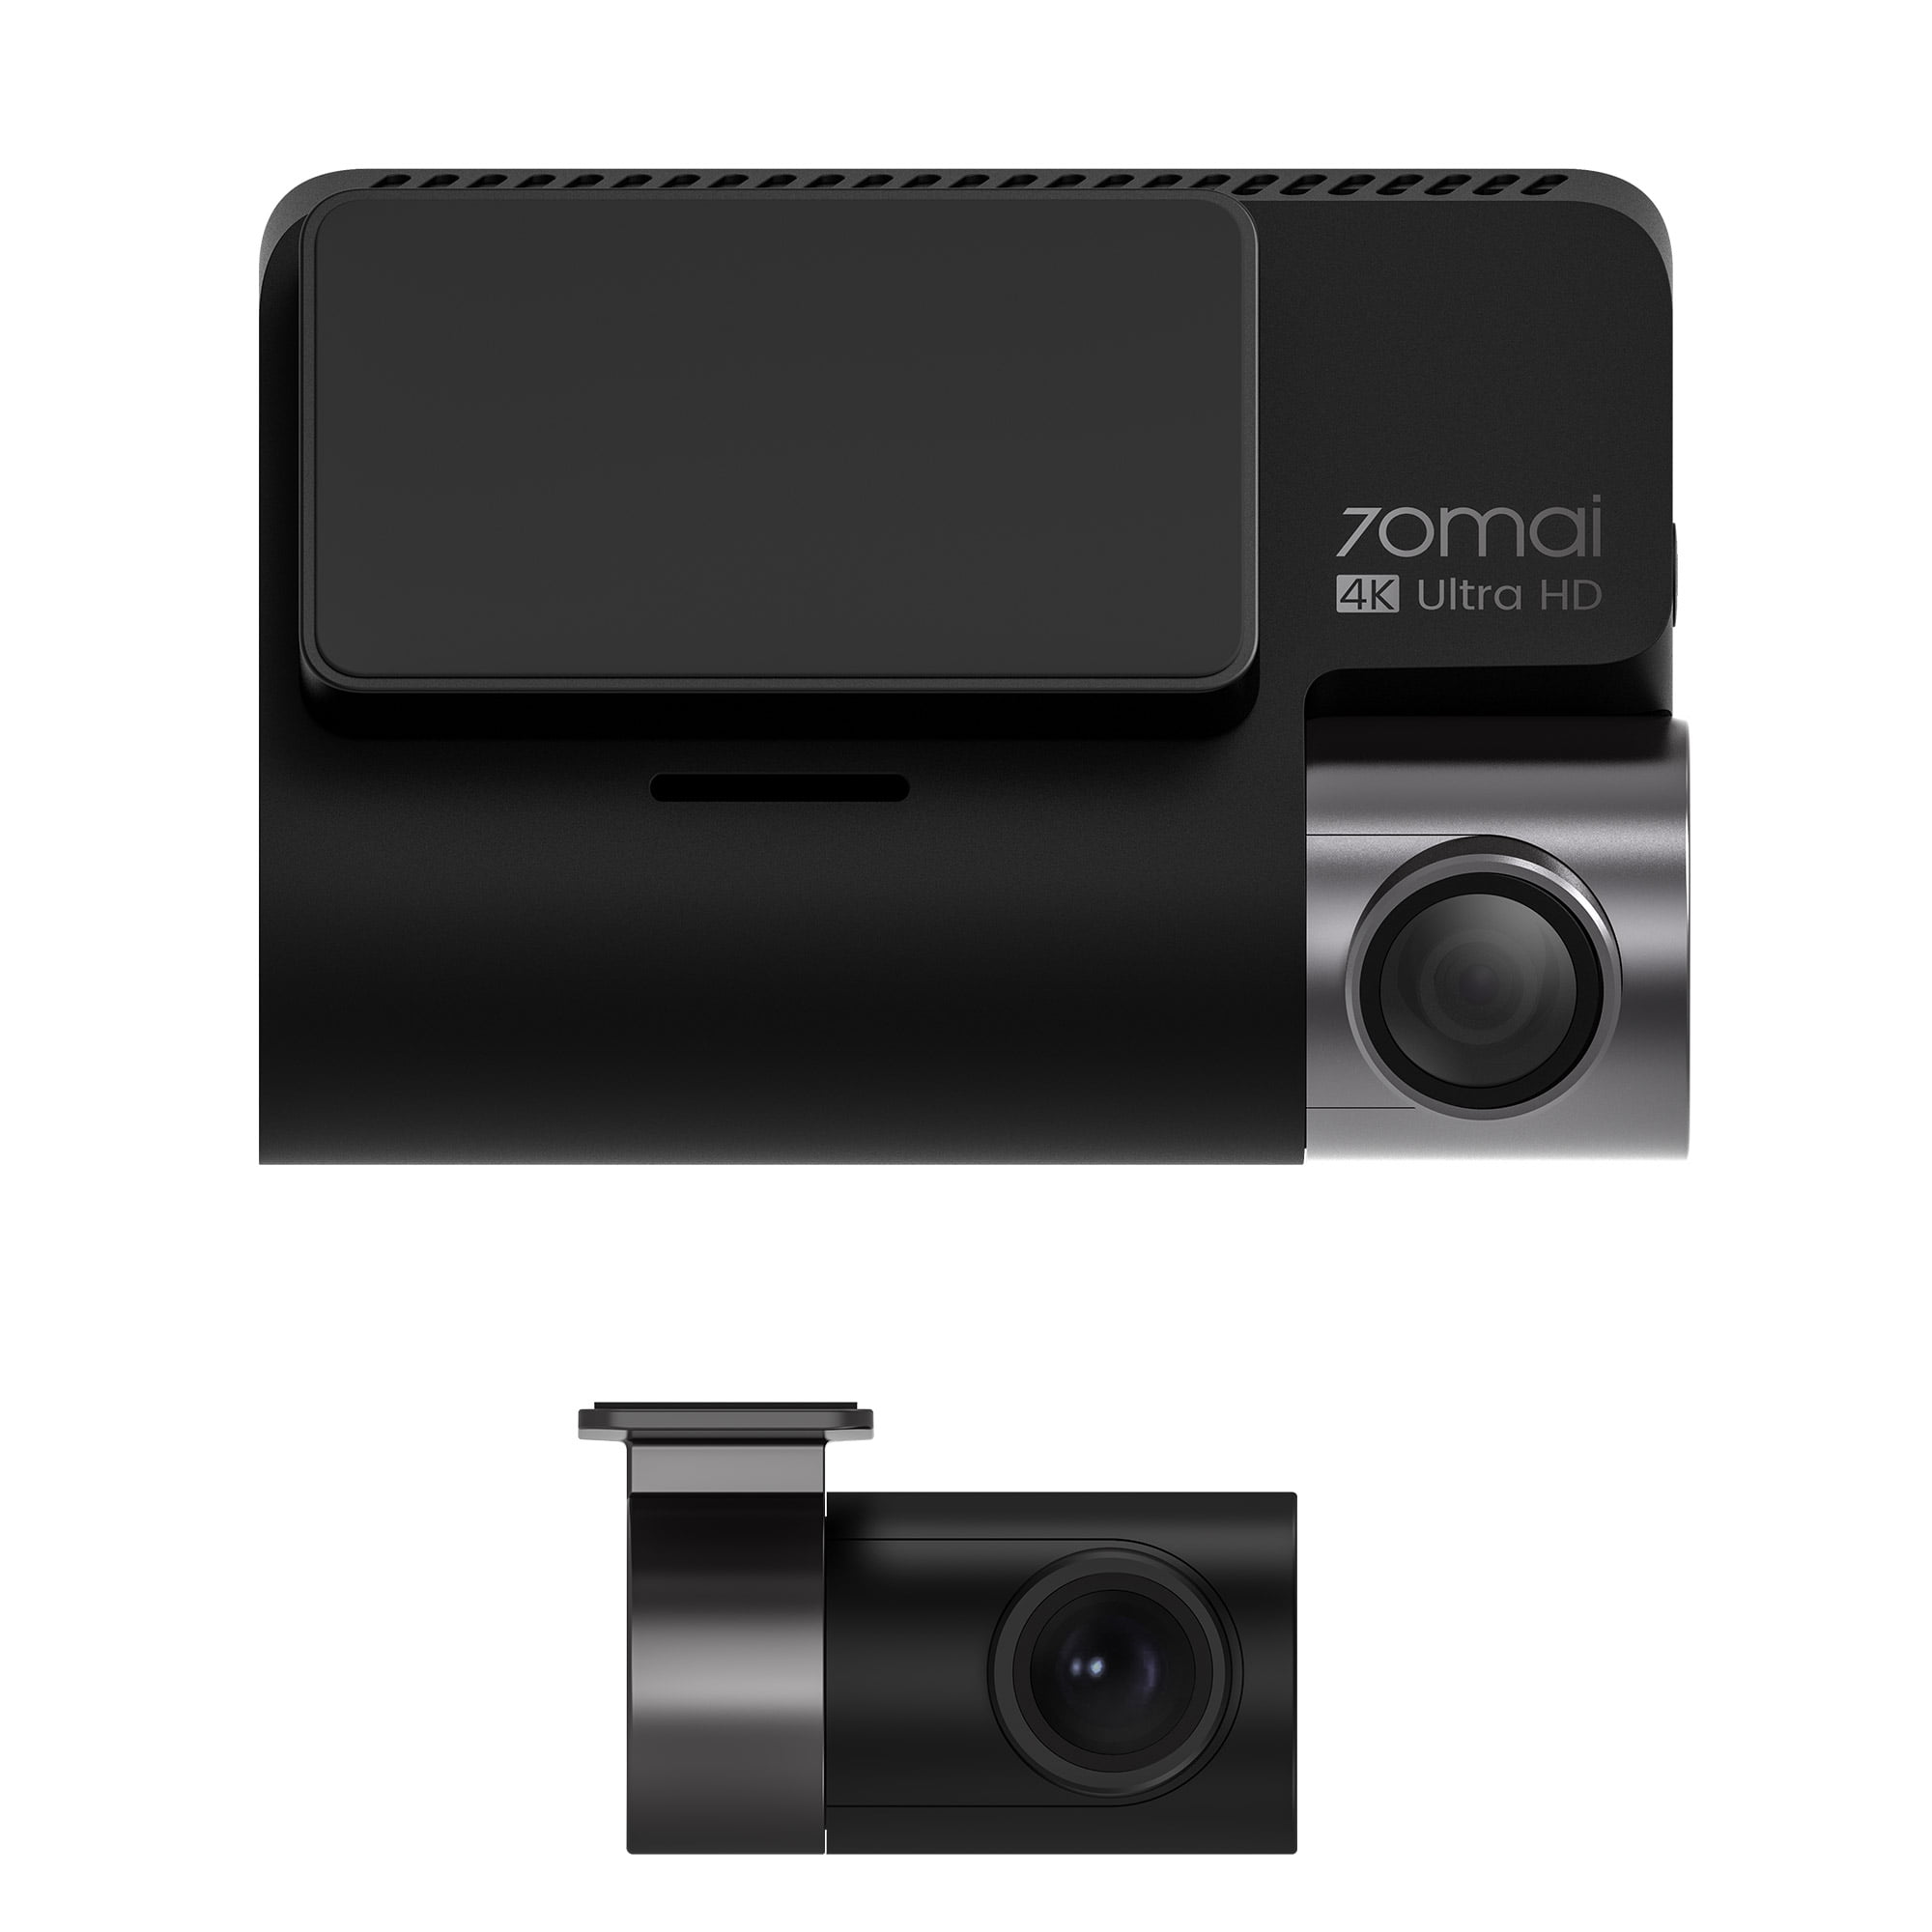 Acheter 70mai A800s 4K et 70Mai RC06 - Kit de caméras